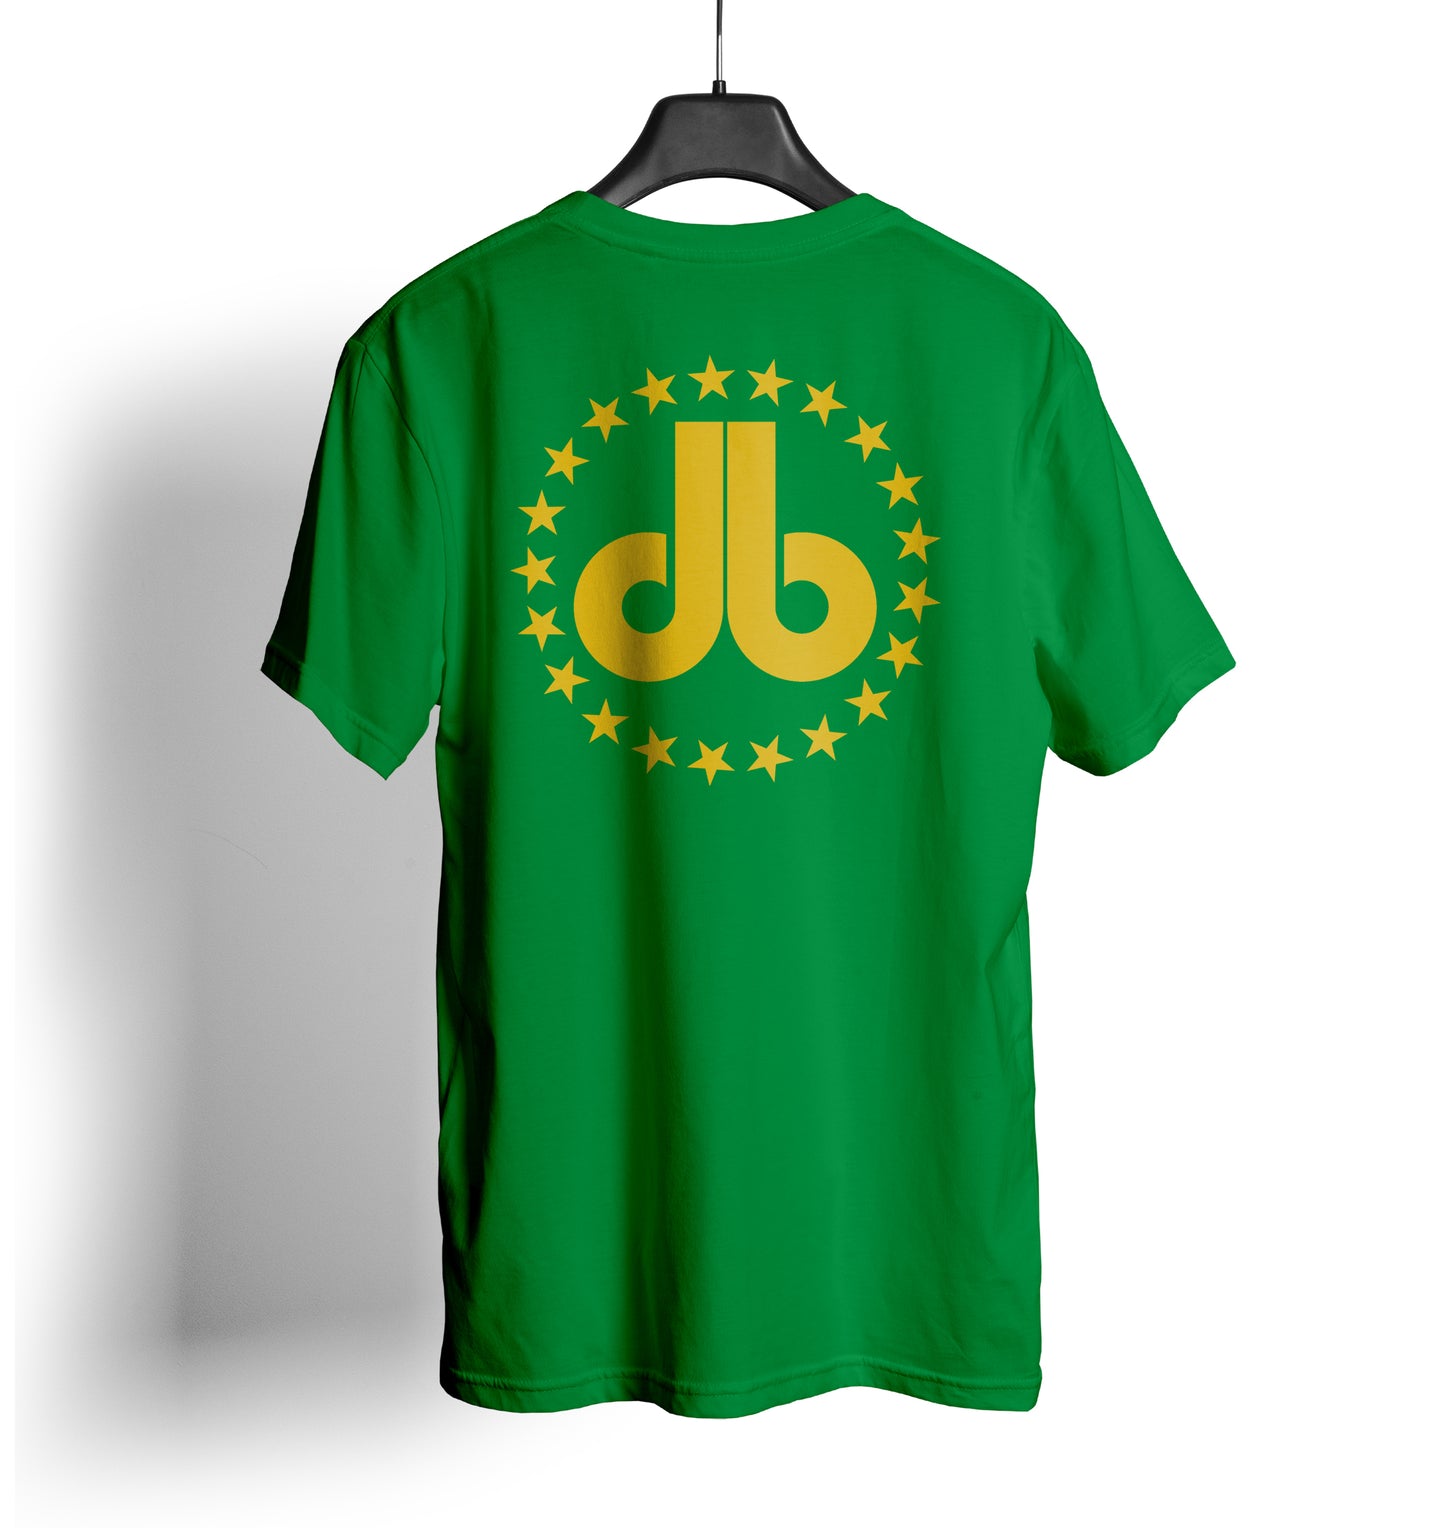 Cornhole T Shirt - Green with Gold Stars